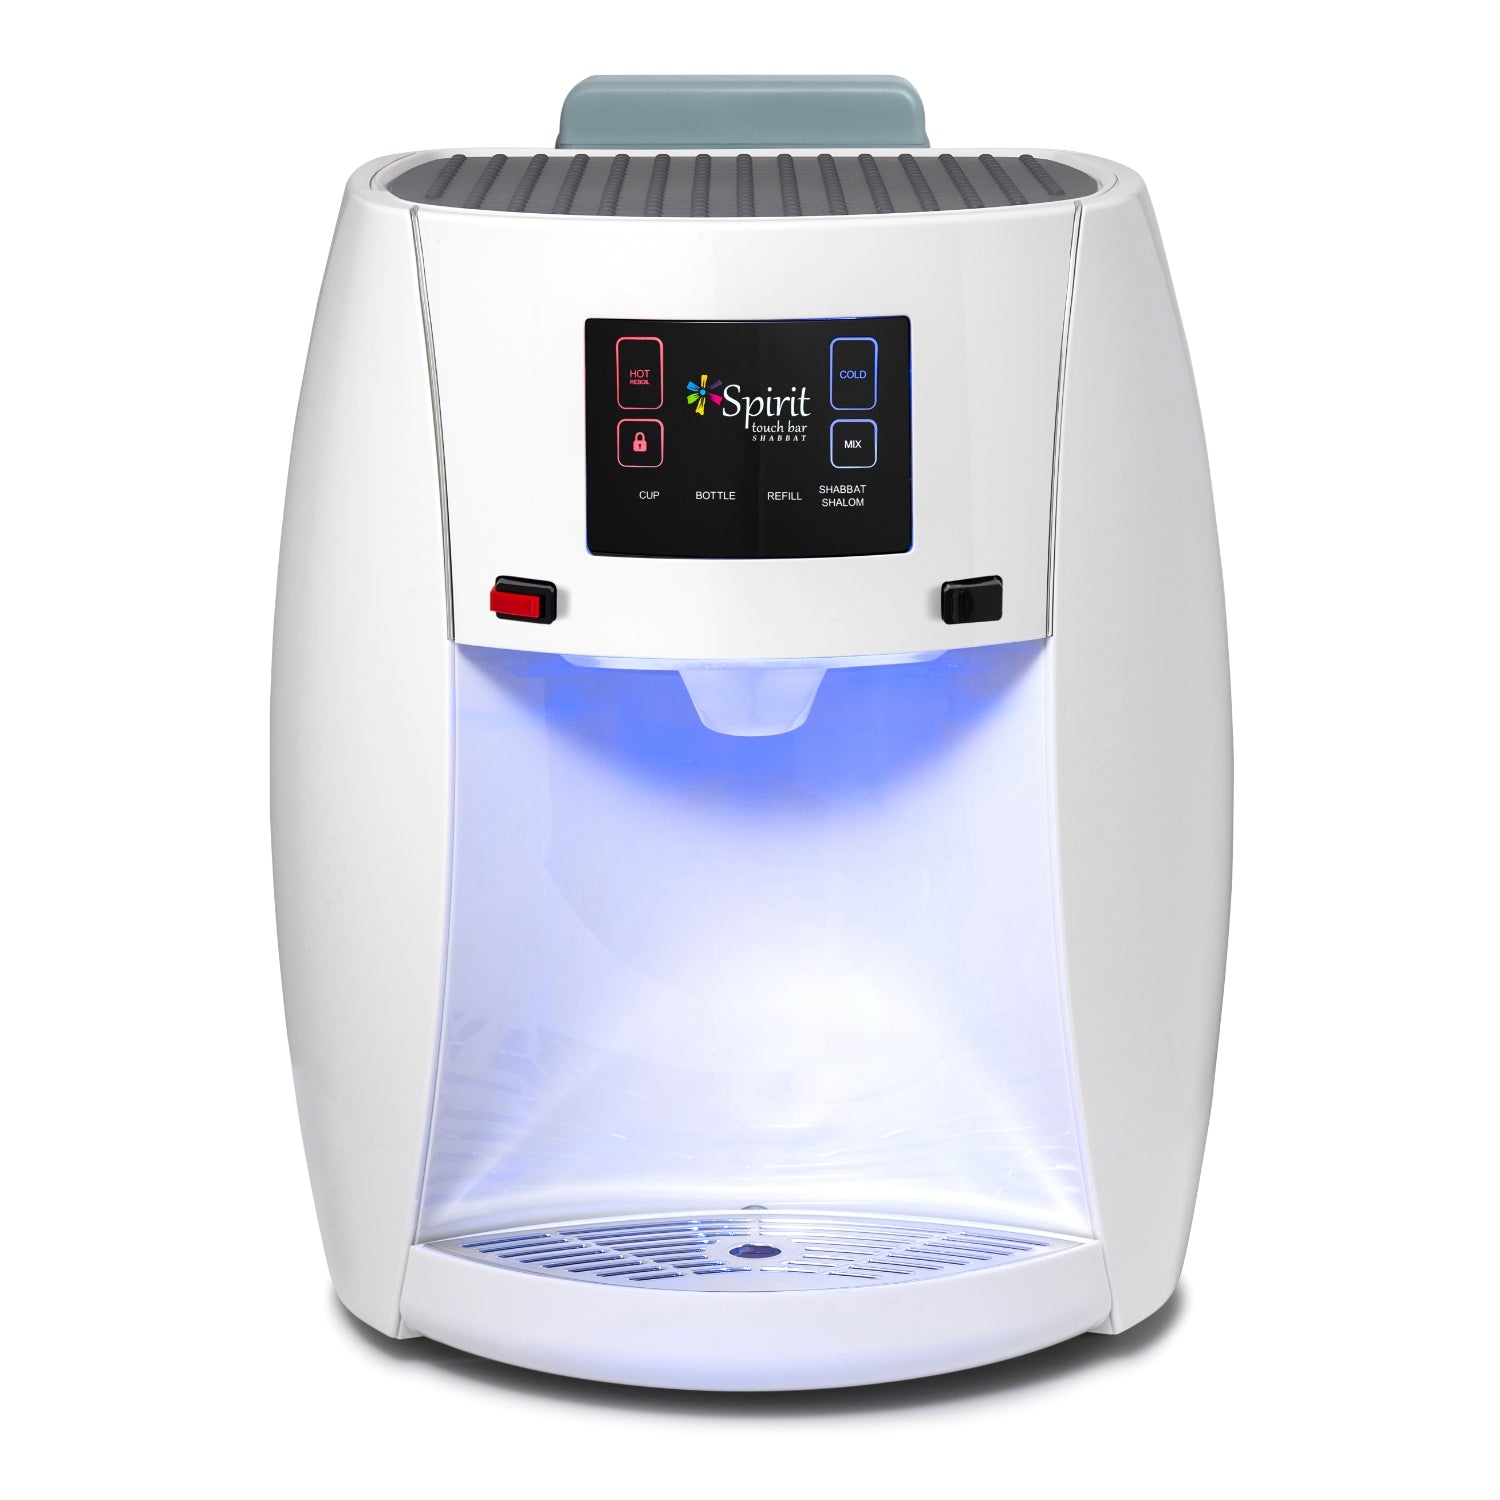 Hot water dispenser brand review: Zojirushi — Best Shabbat Products